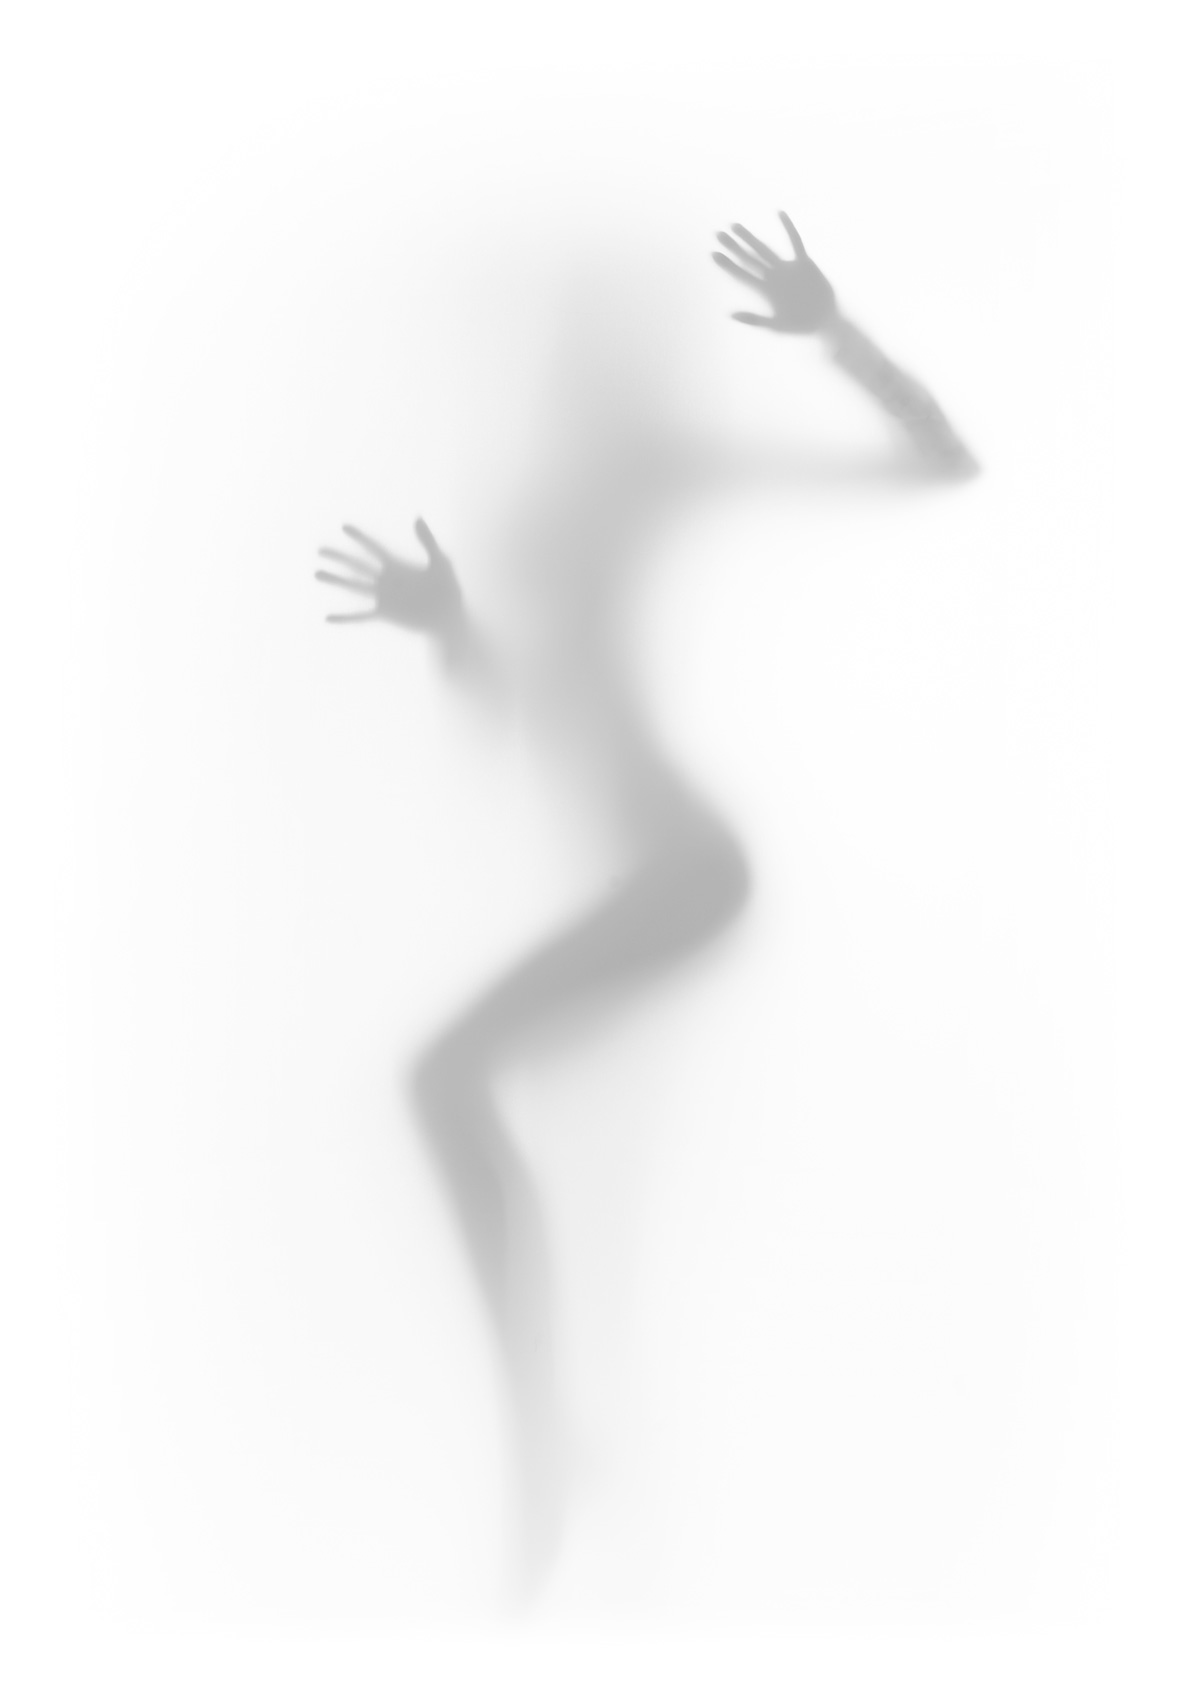 girl silhouette